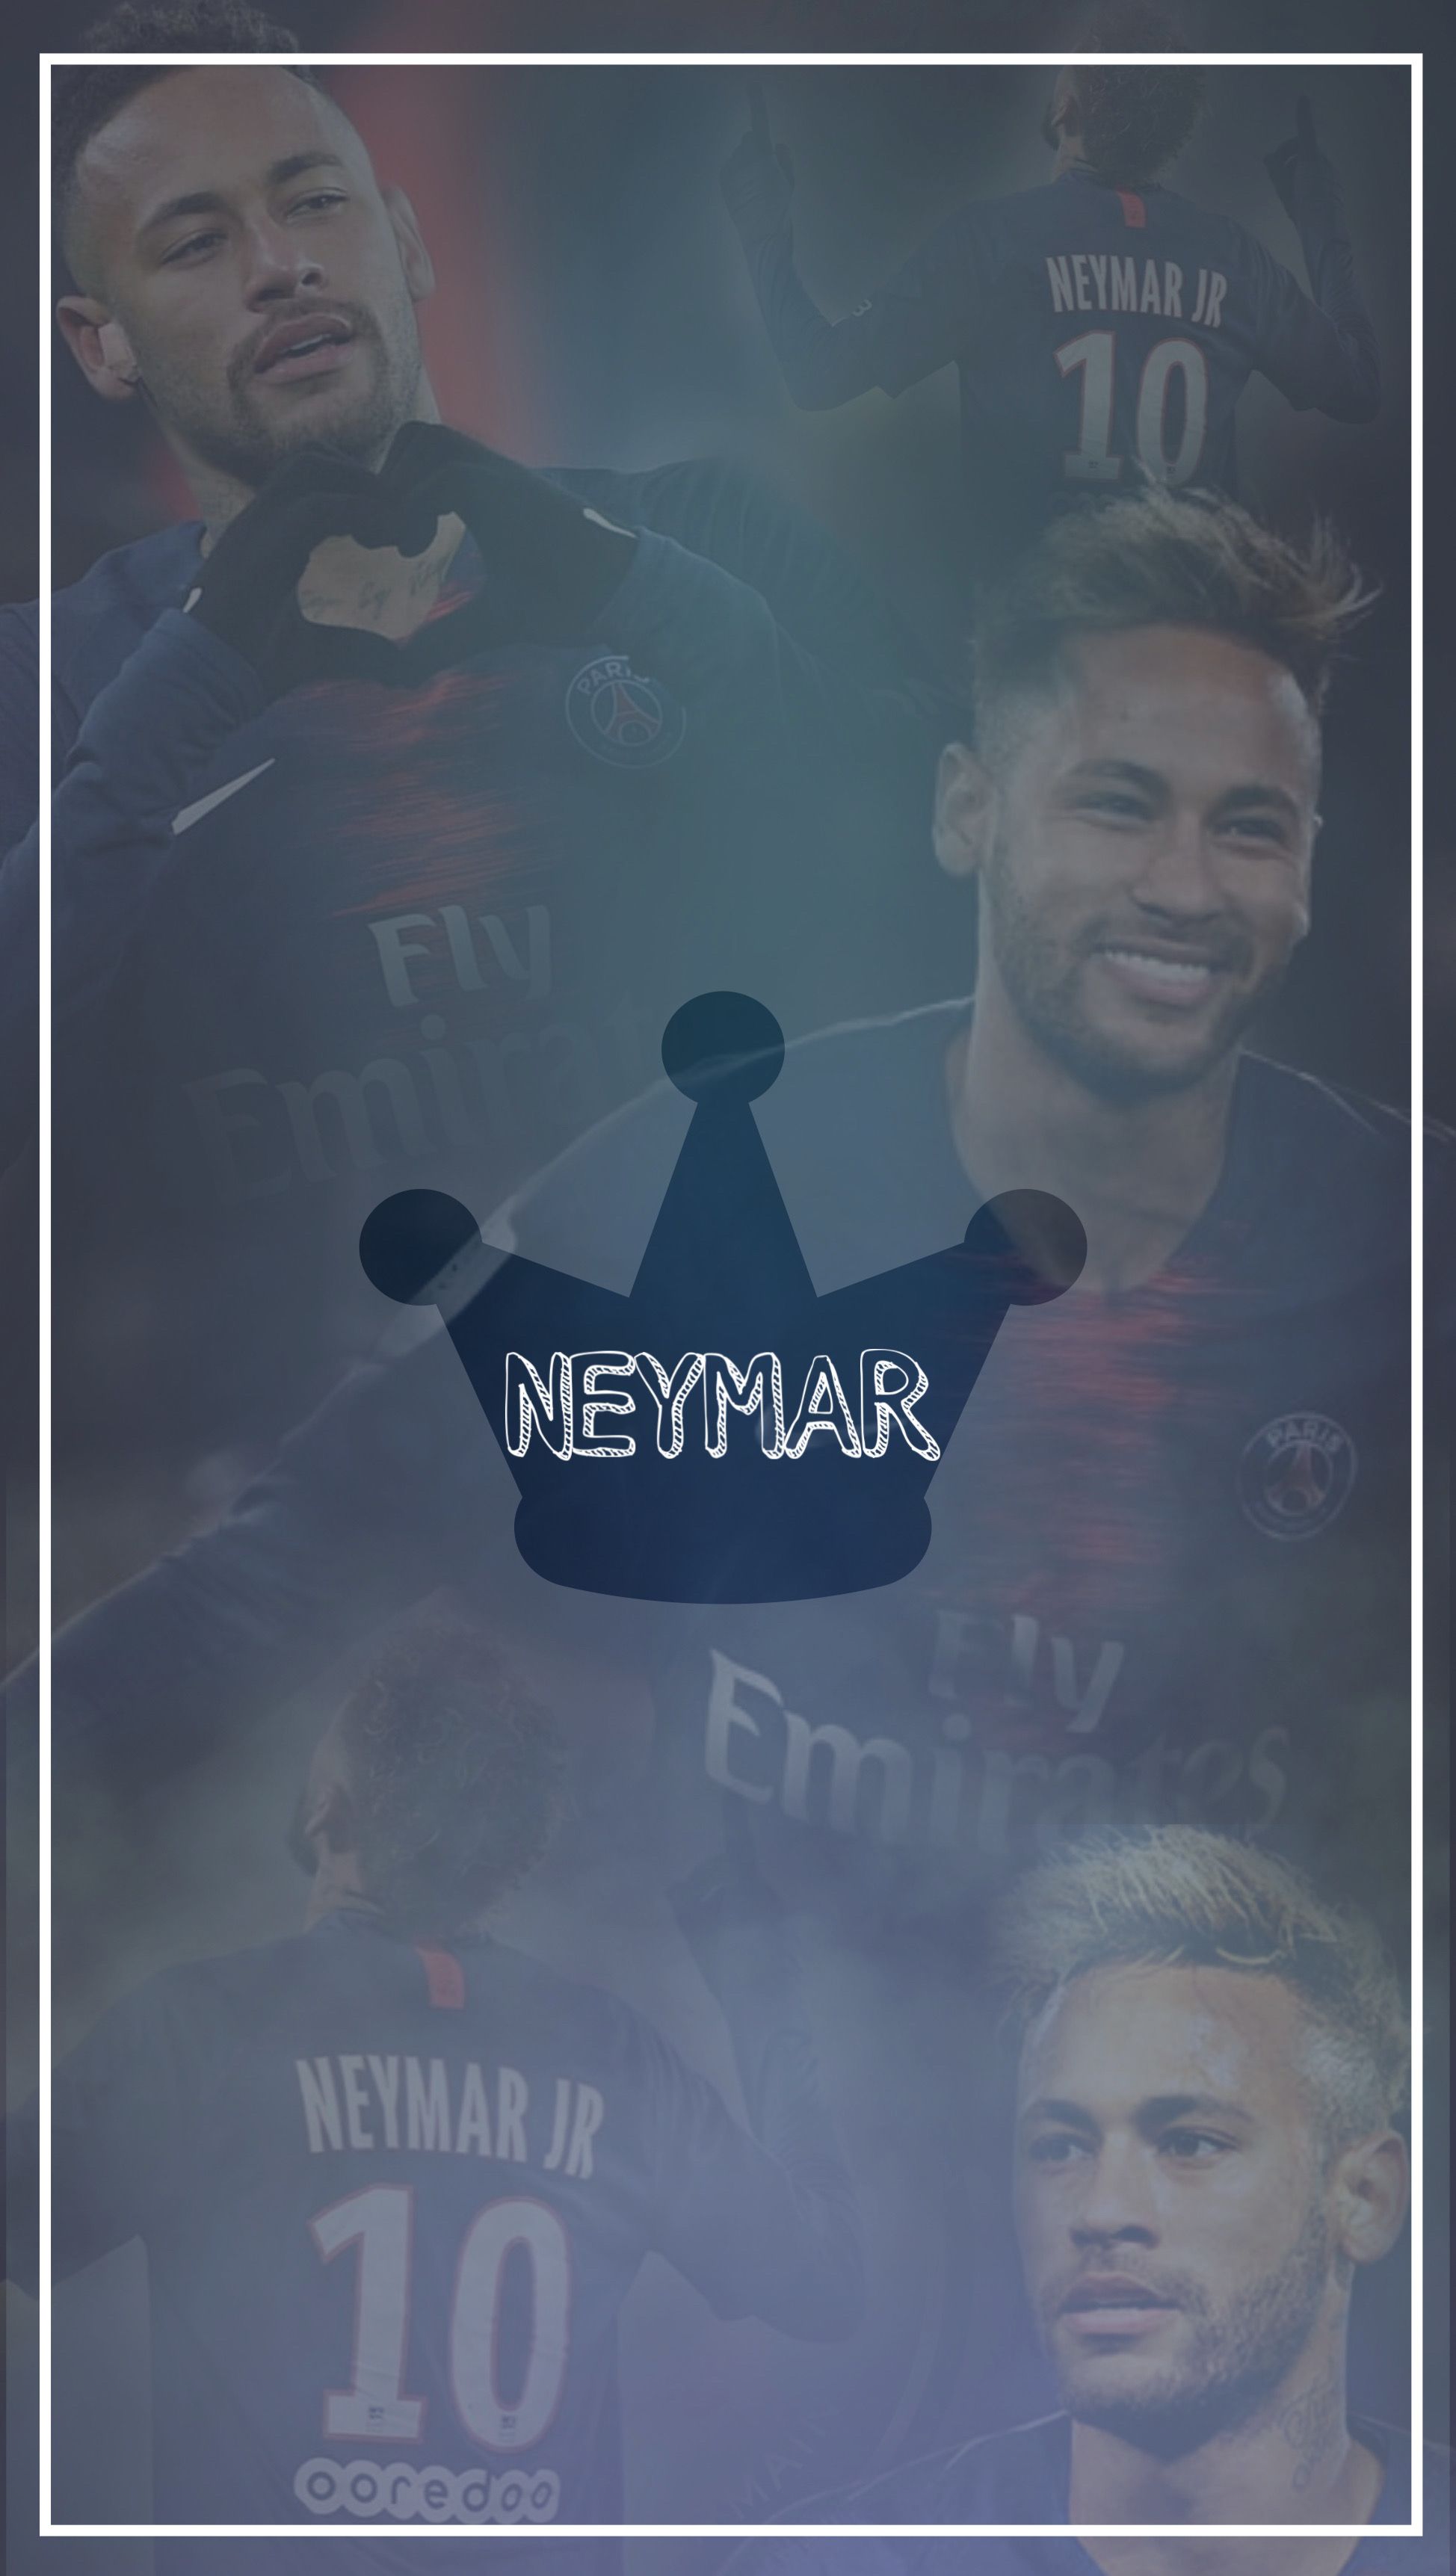 Aesthetic Lockscreen / Wallpaper, NEYMAR. Neymar, Neymar jr, Lockscreen wallpaper